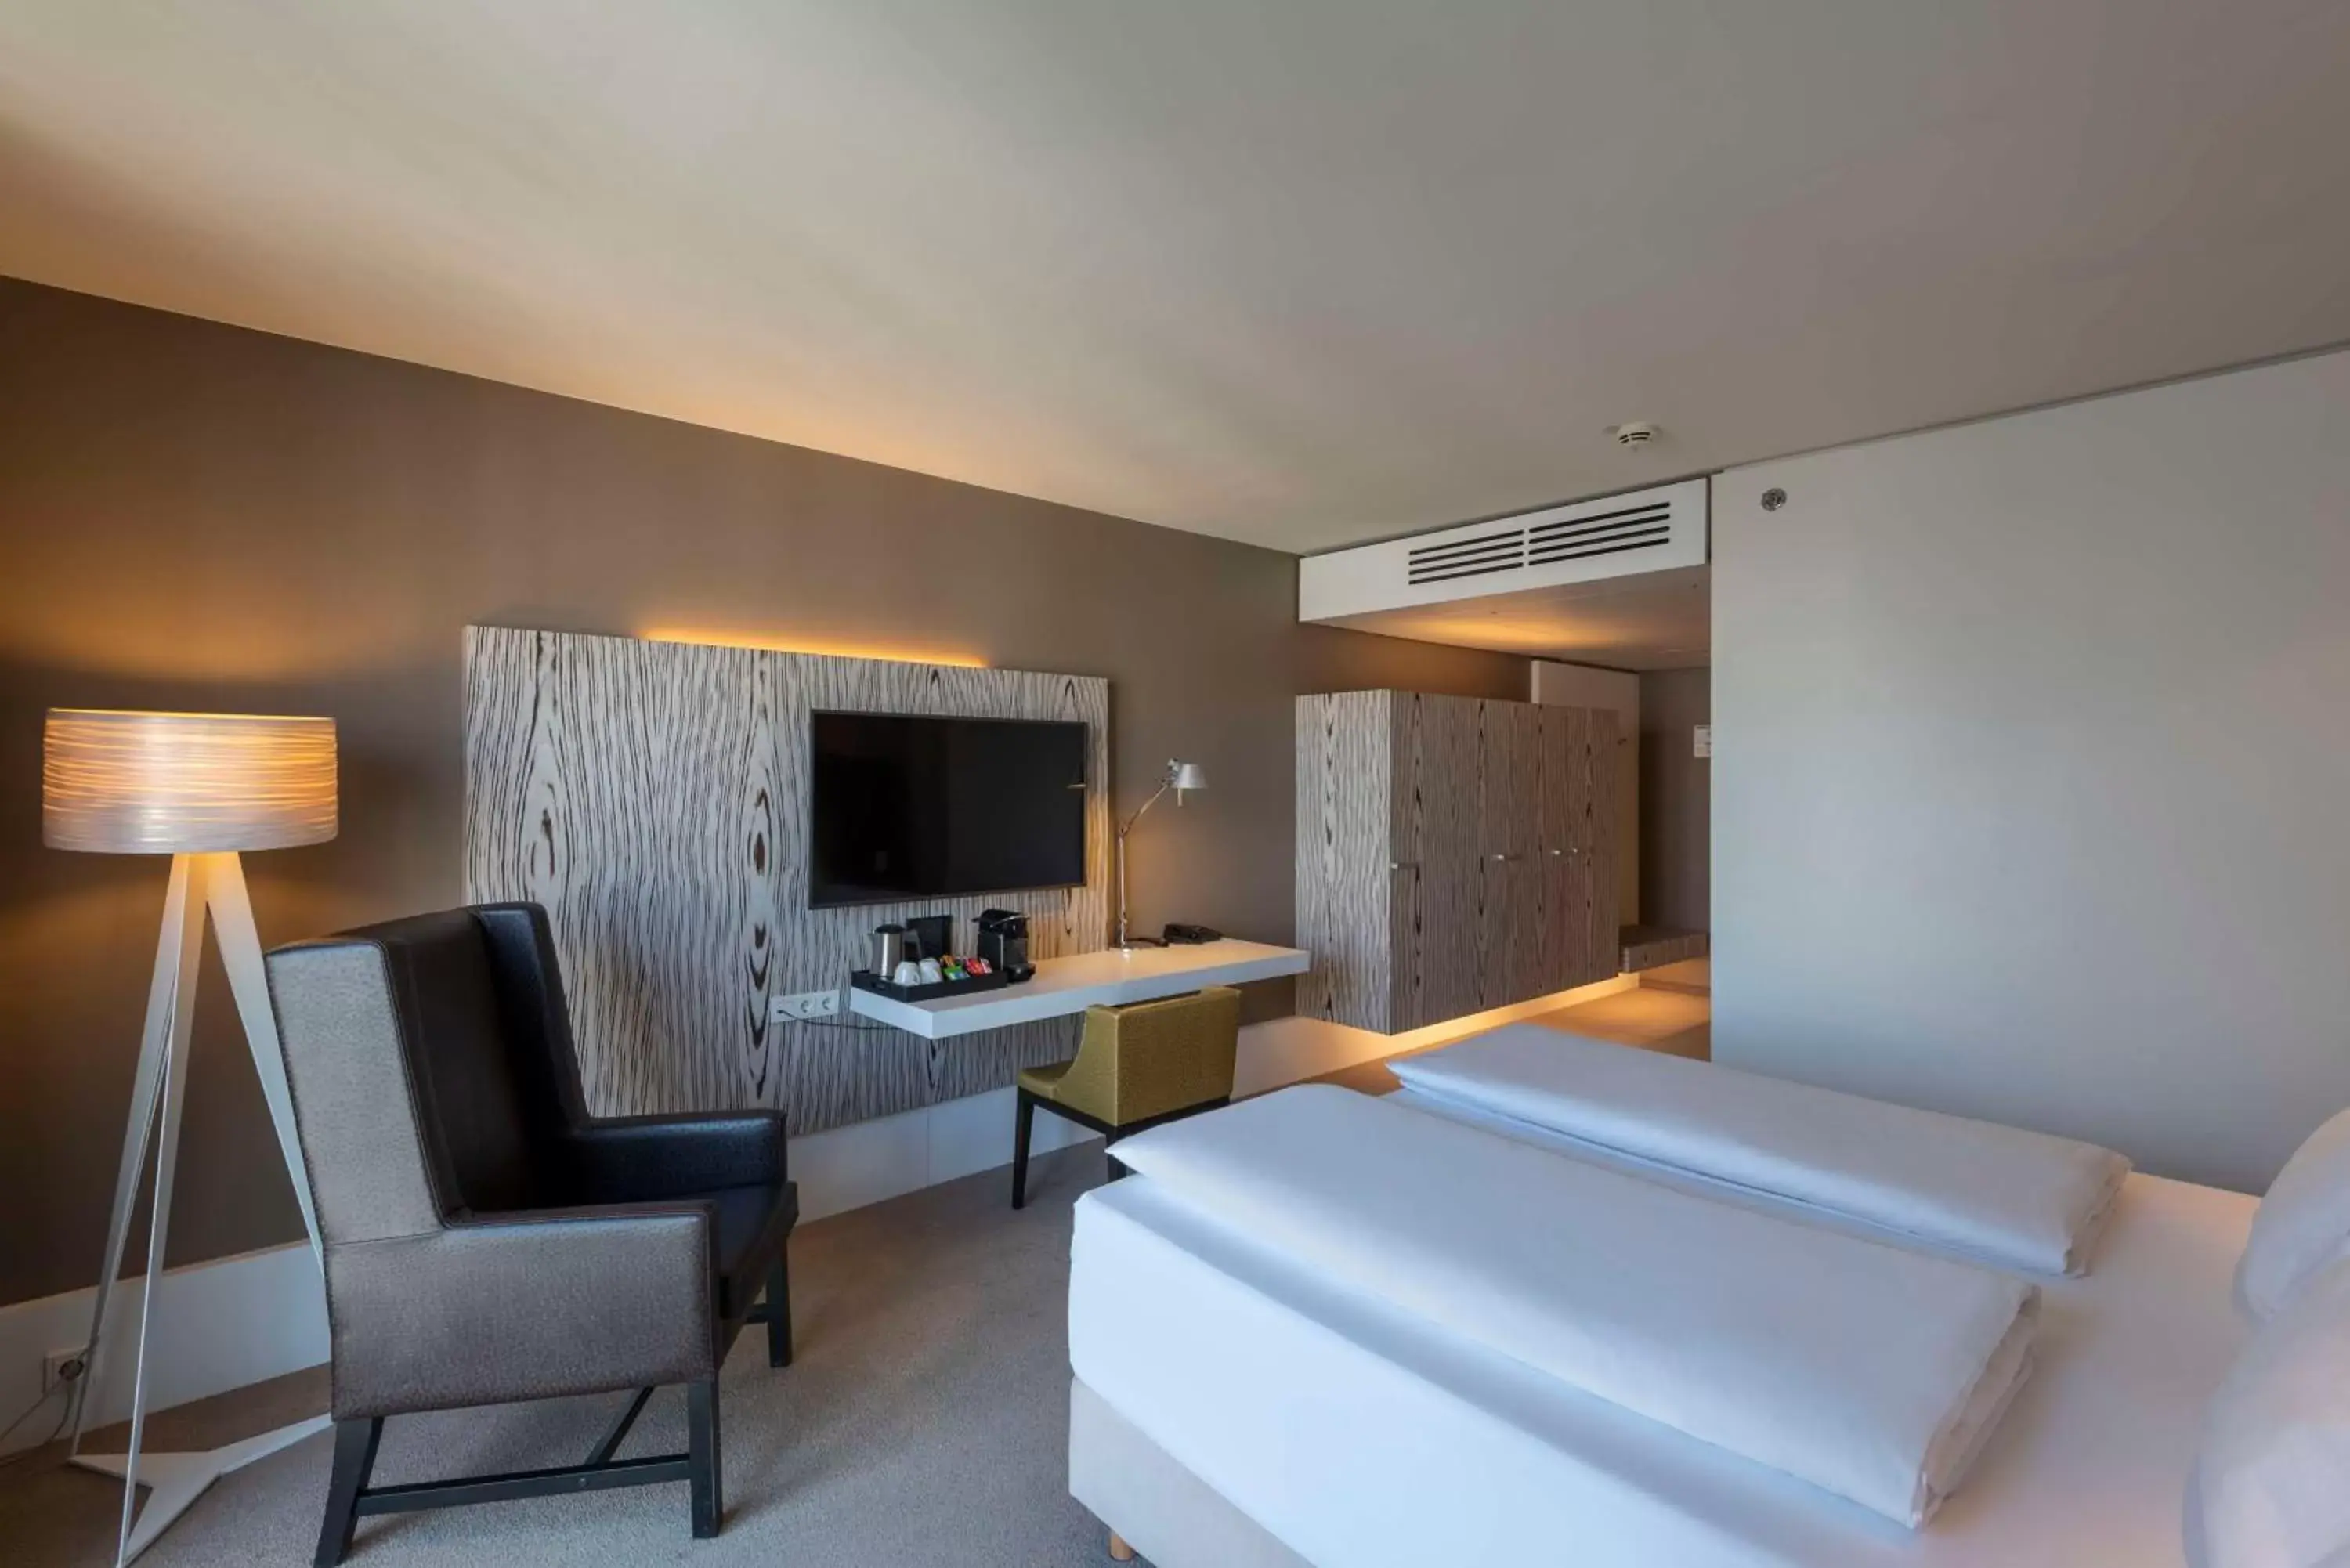 Bedroom in Doubletree by Hilton Vienna Schonbrunn